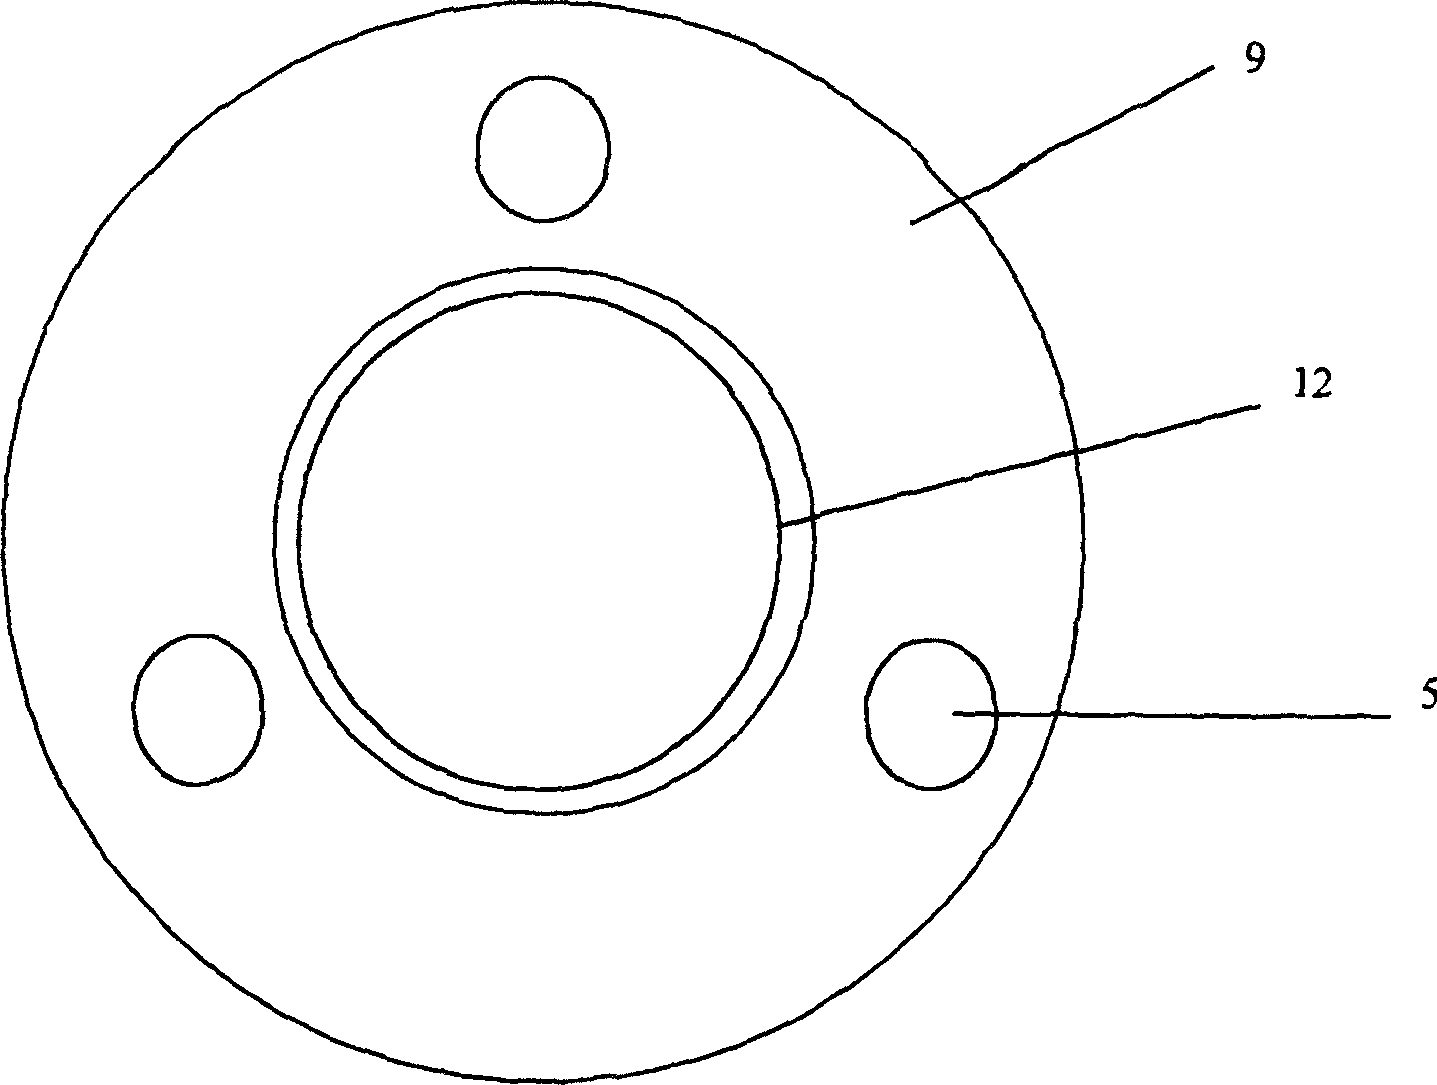 Crucible type evaporator source used for organic electrofluorescence type film plating machines